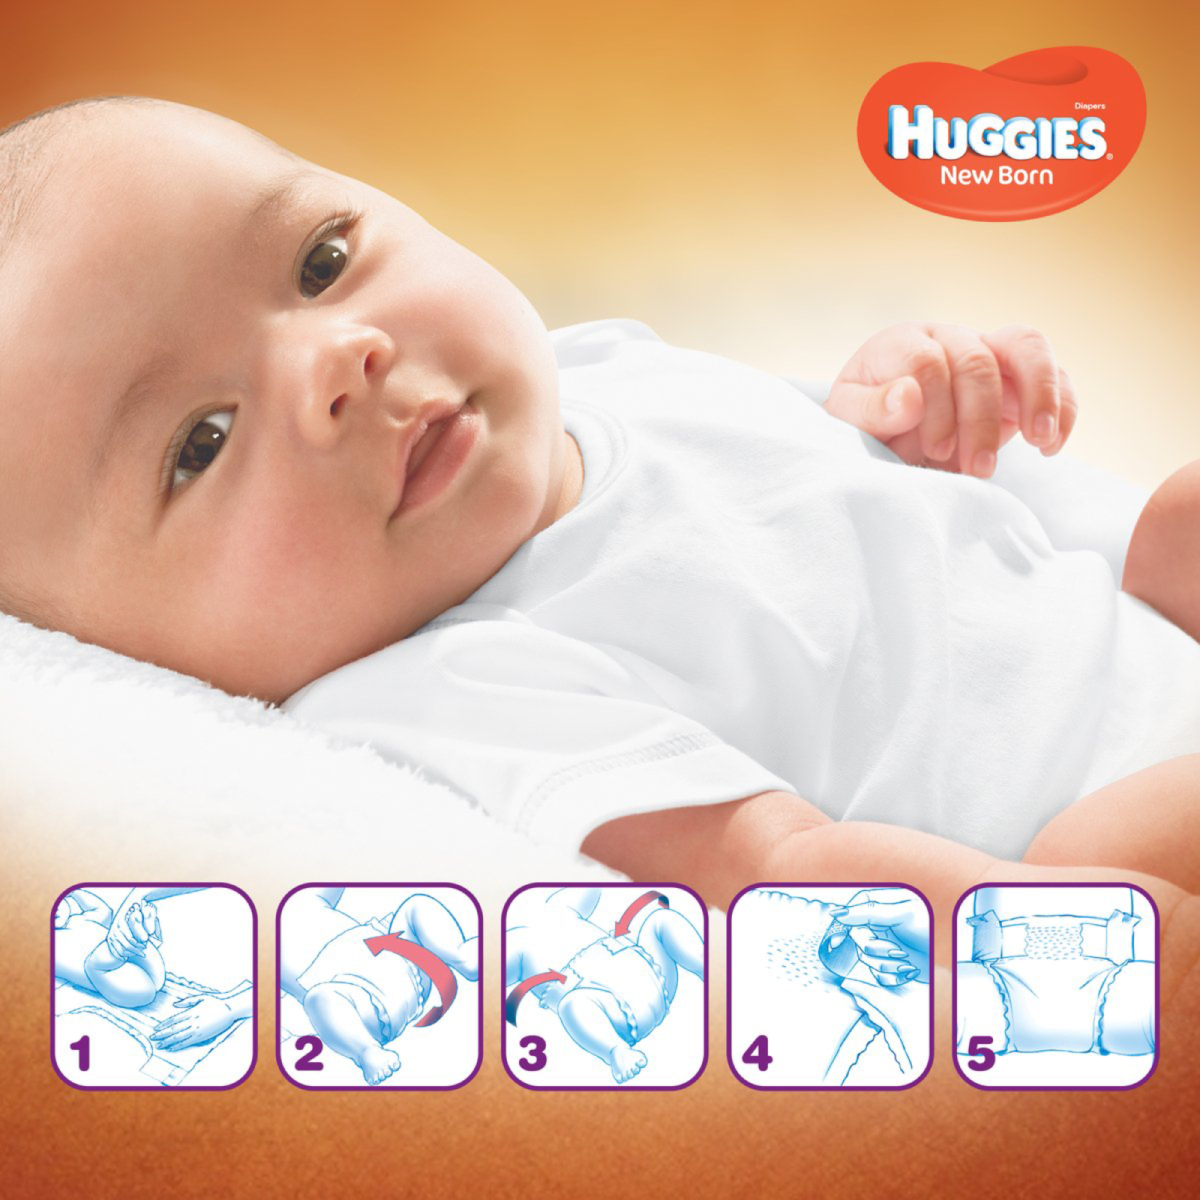 Huggies New Born Diaper Size 2, 4-6kg Value Pack 2 x 64 pcs